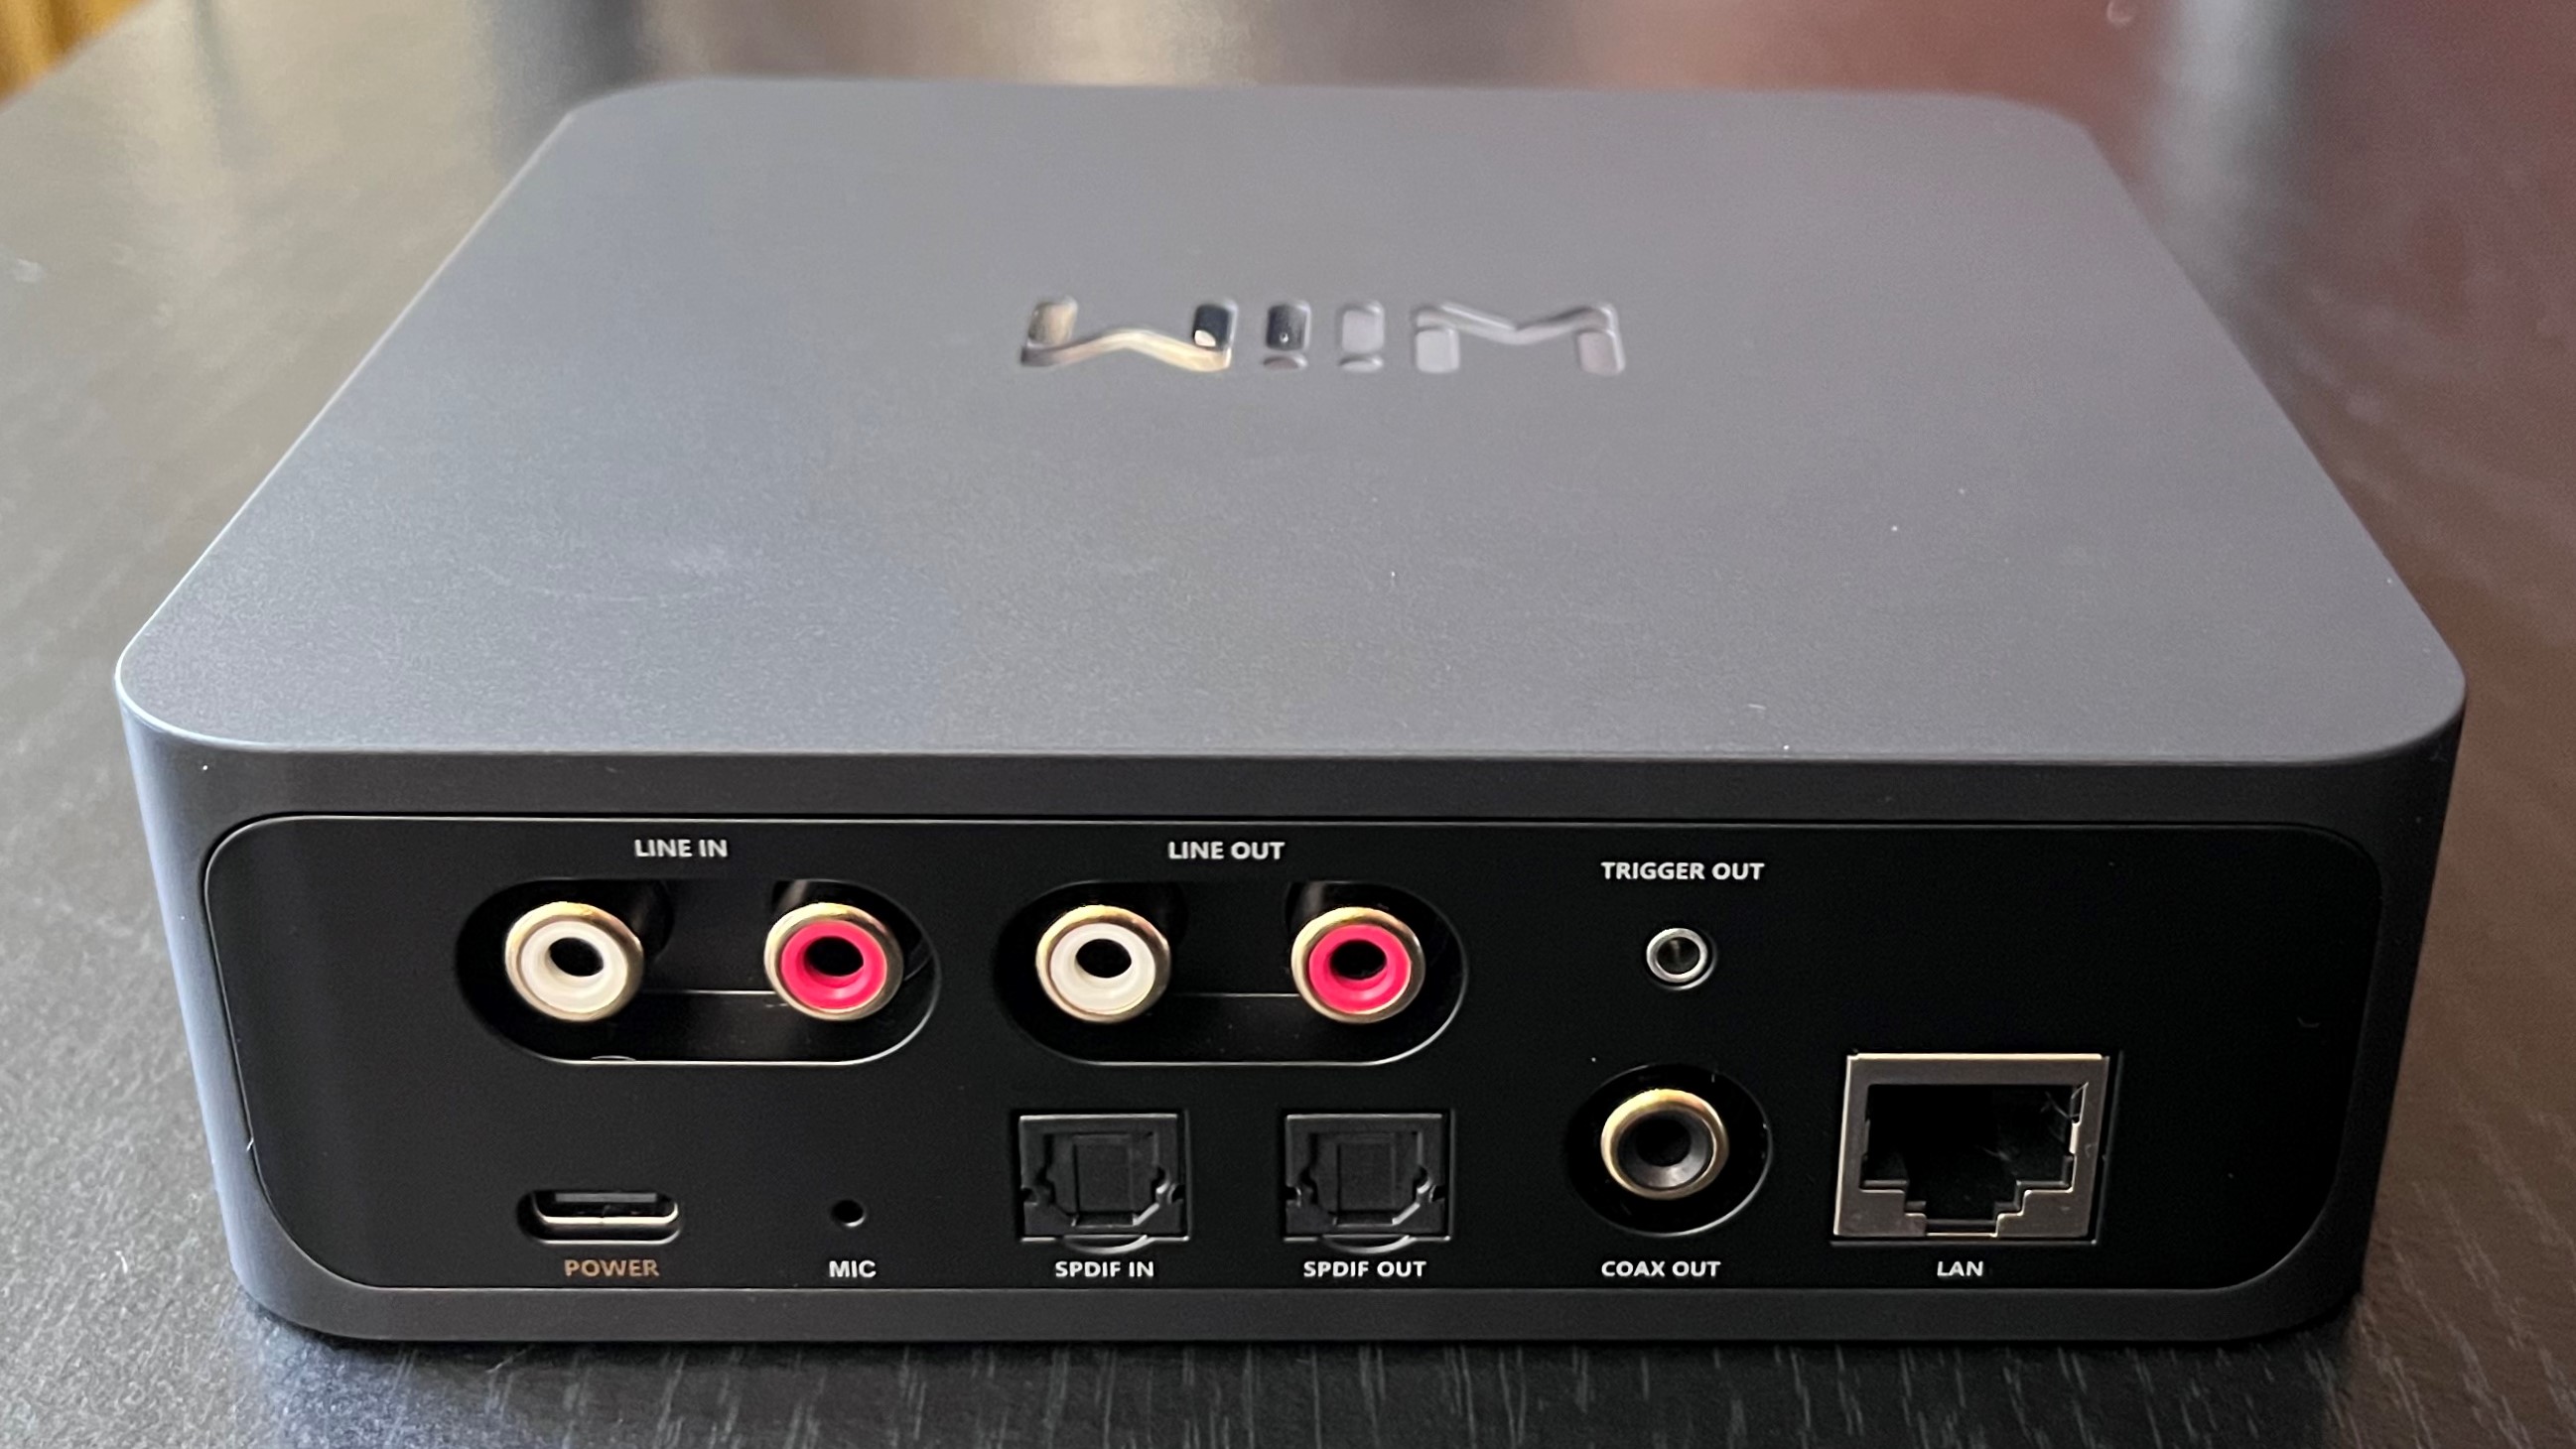 WiiM Pro streamer rear panel connections